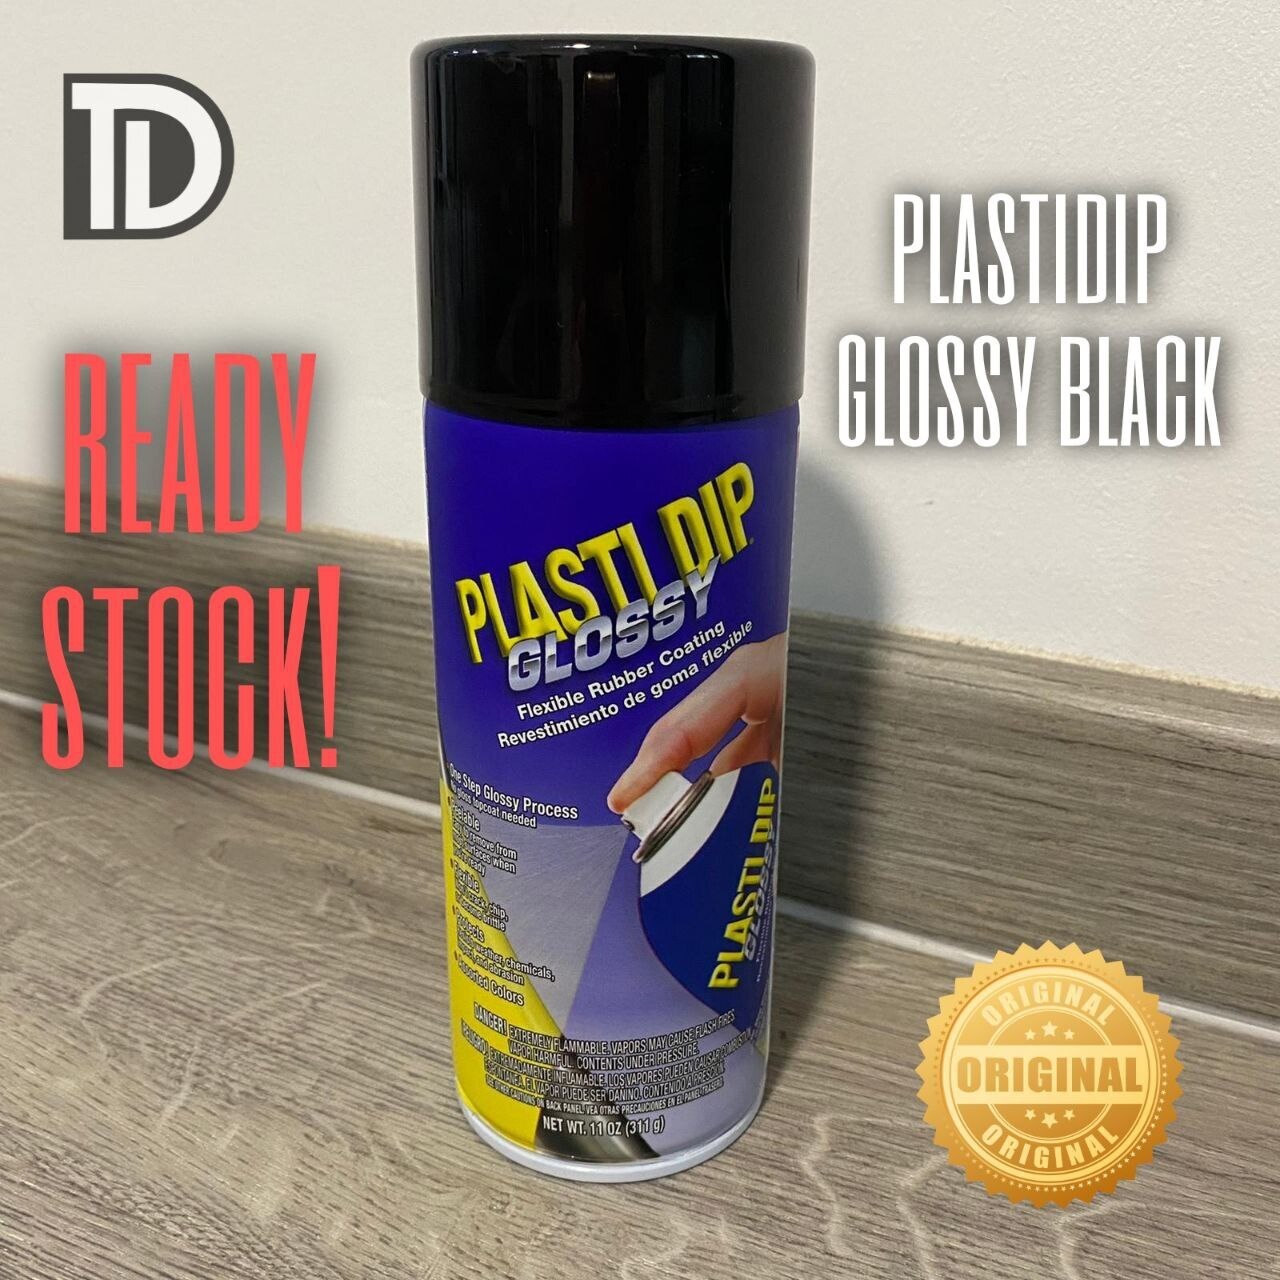 Plastidip Glossy Black Plasti Dip Spray Gloss Black Rubber Paint